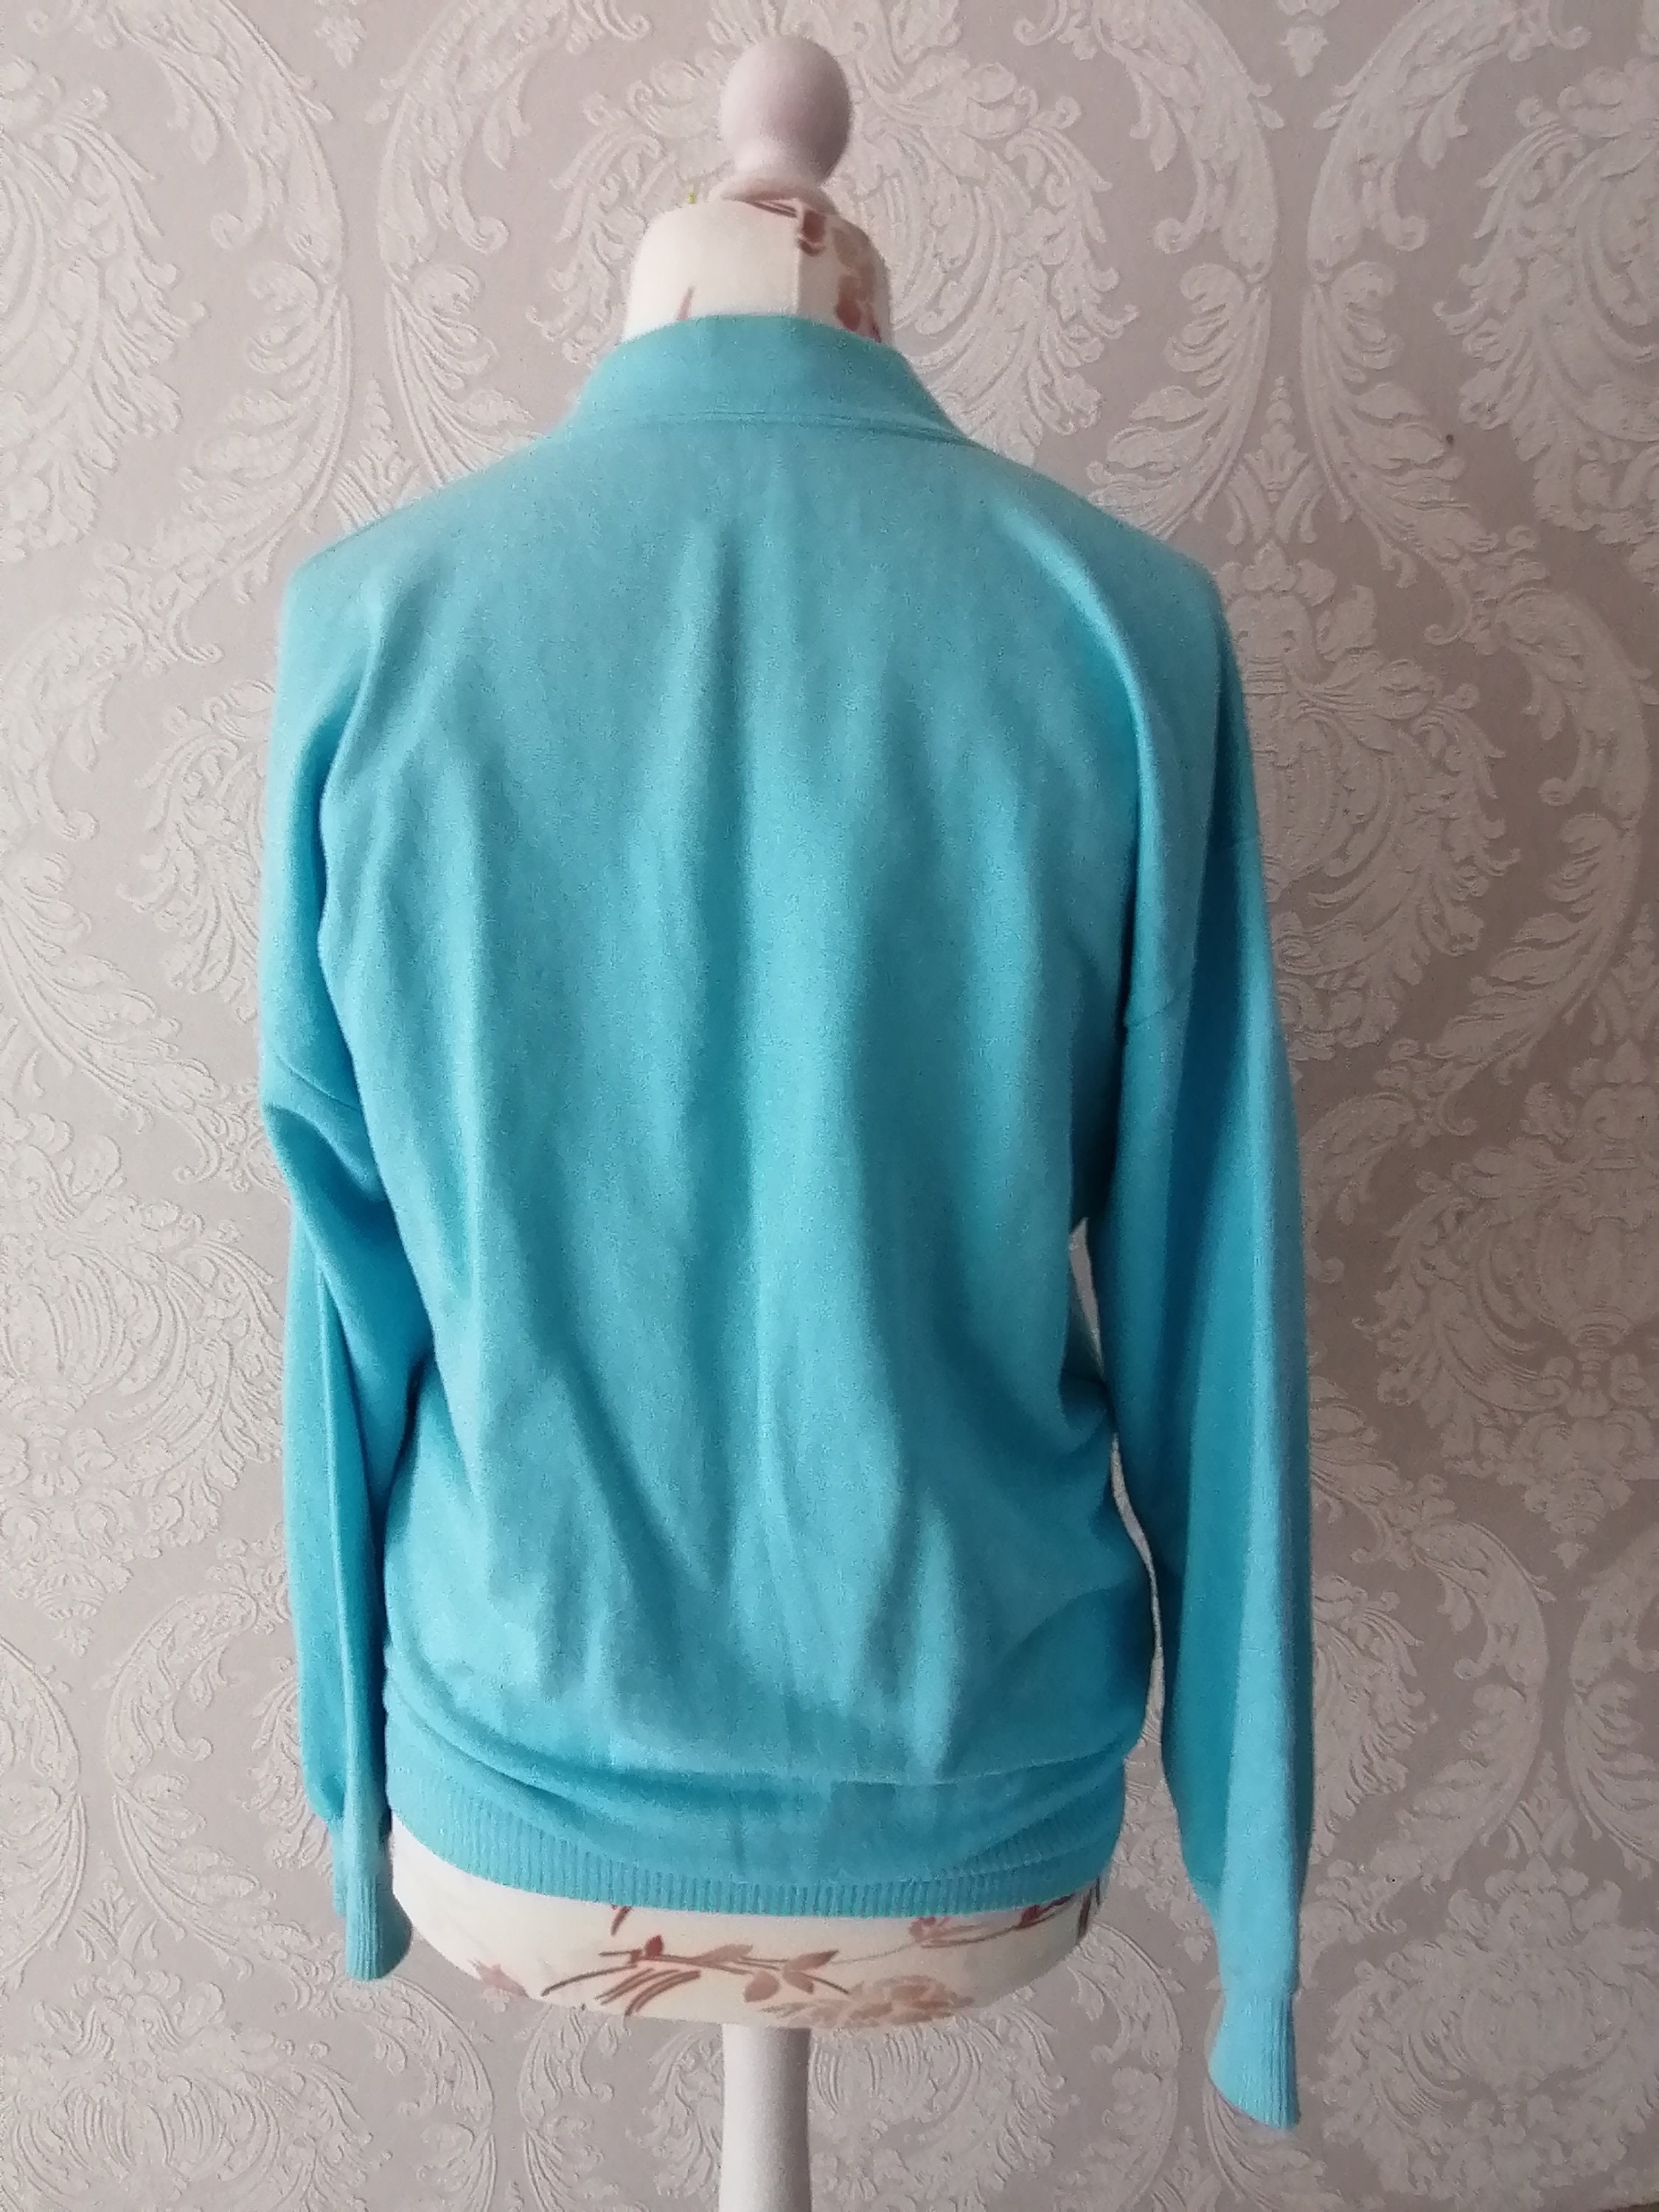 Vintage Sky Blue Cotton Sweatshirt Cardigan Size Small Women | Etsy